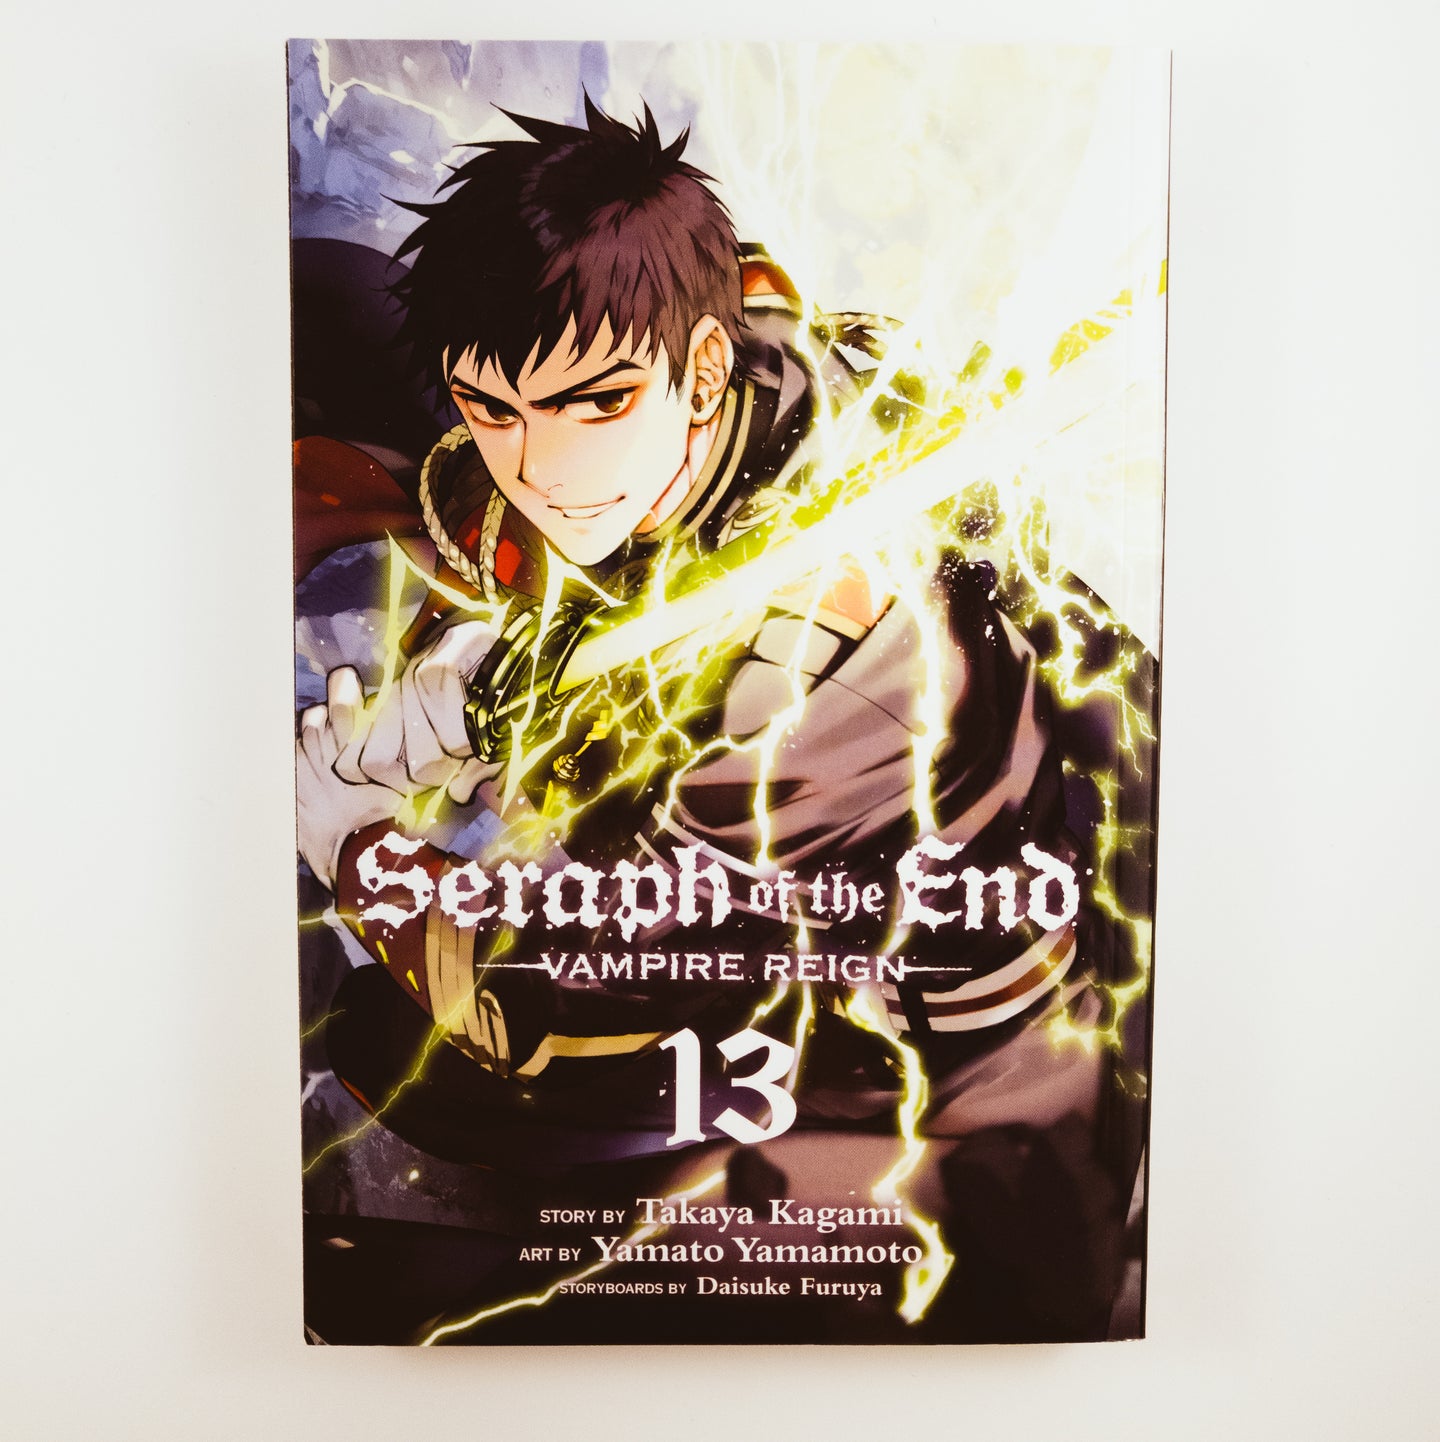 Seraph of the End Volume 13. Manga by Takaya Kagami, Yamato Yamamoto and Daisuke Furuya.